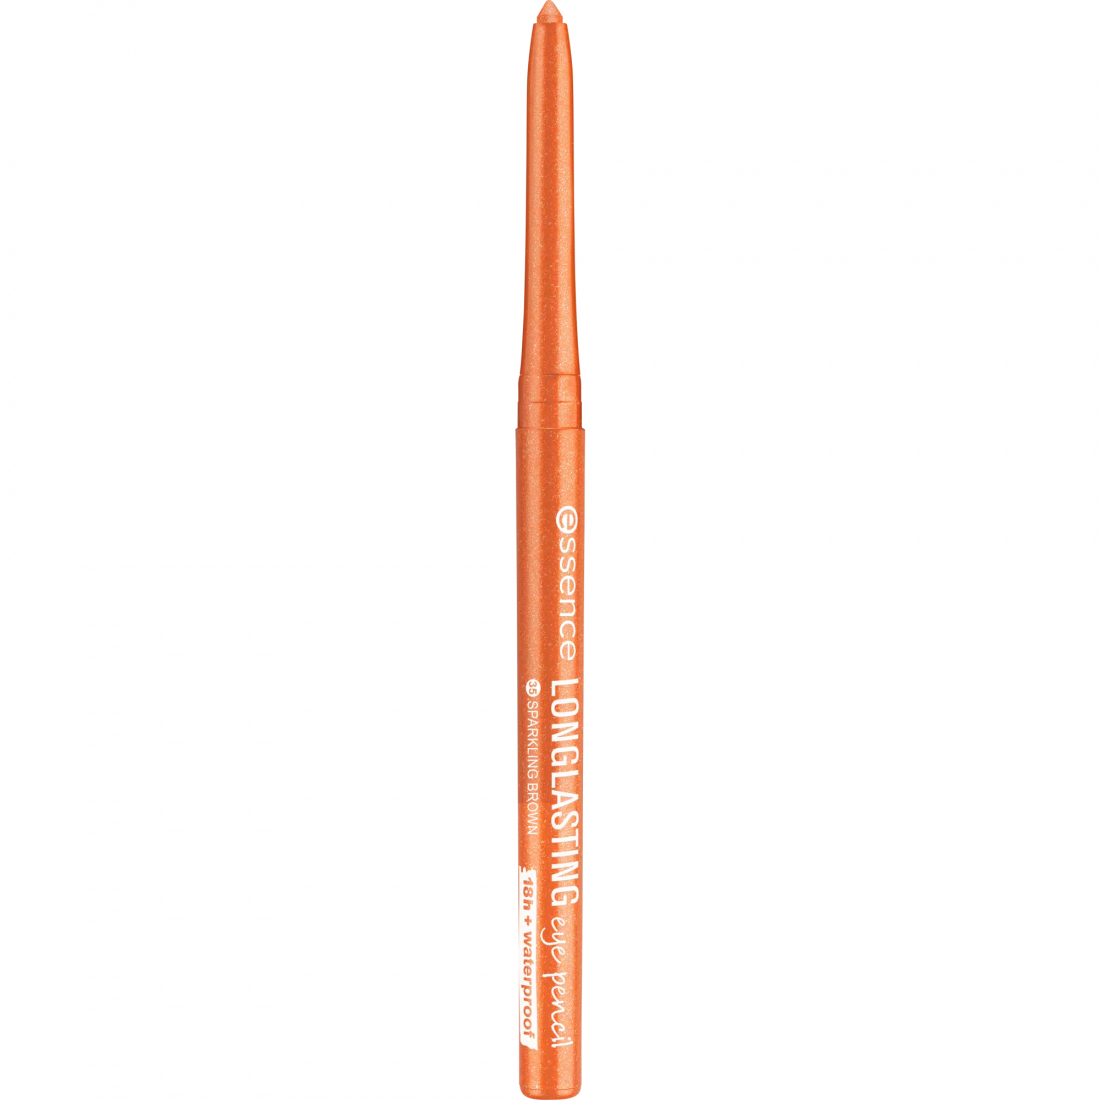 'Long-Lasting 18h' Waterproof Eyeliner Pencil - 39 Shimmer Sunsation 0.28 g